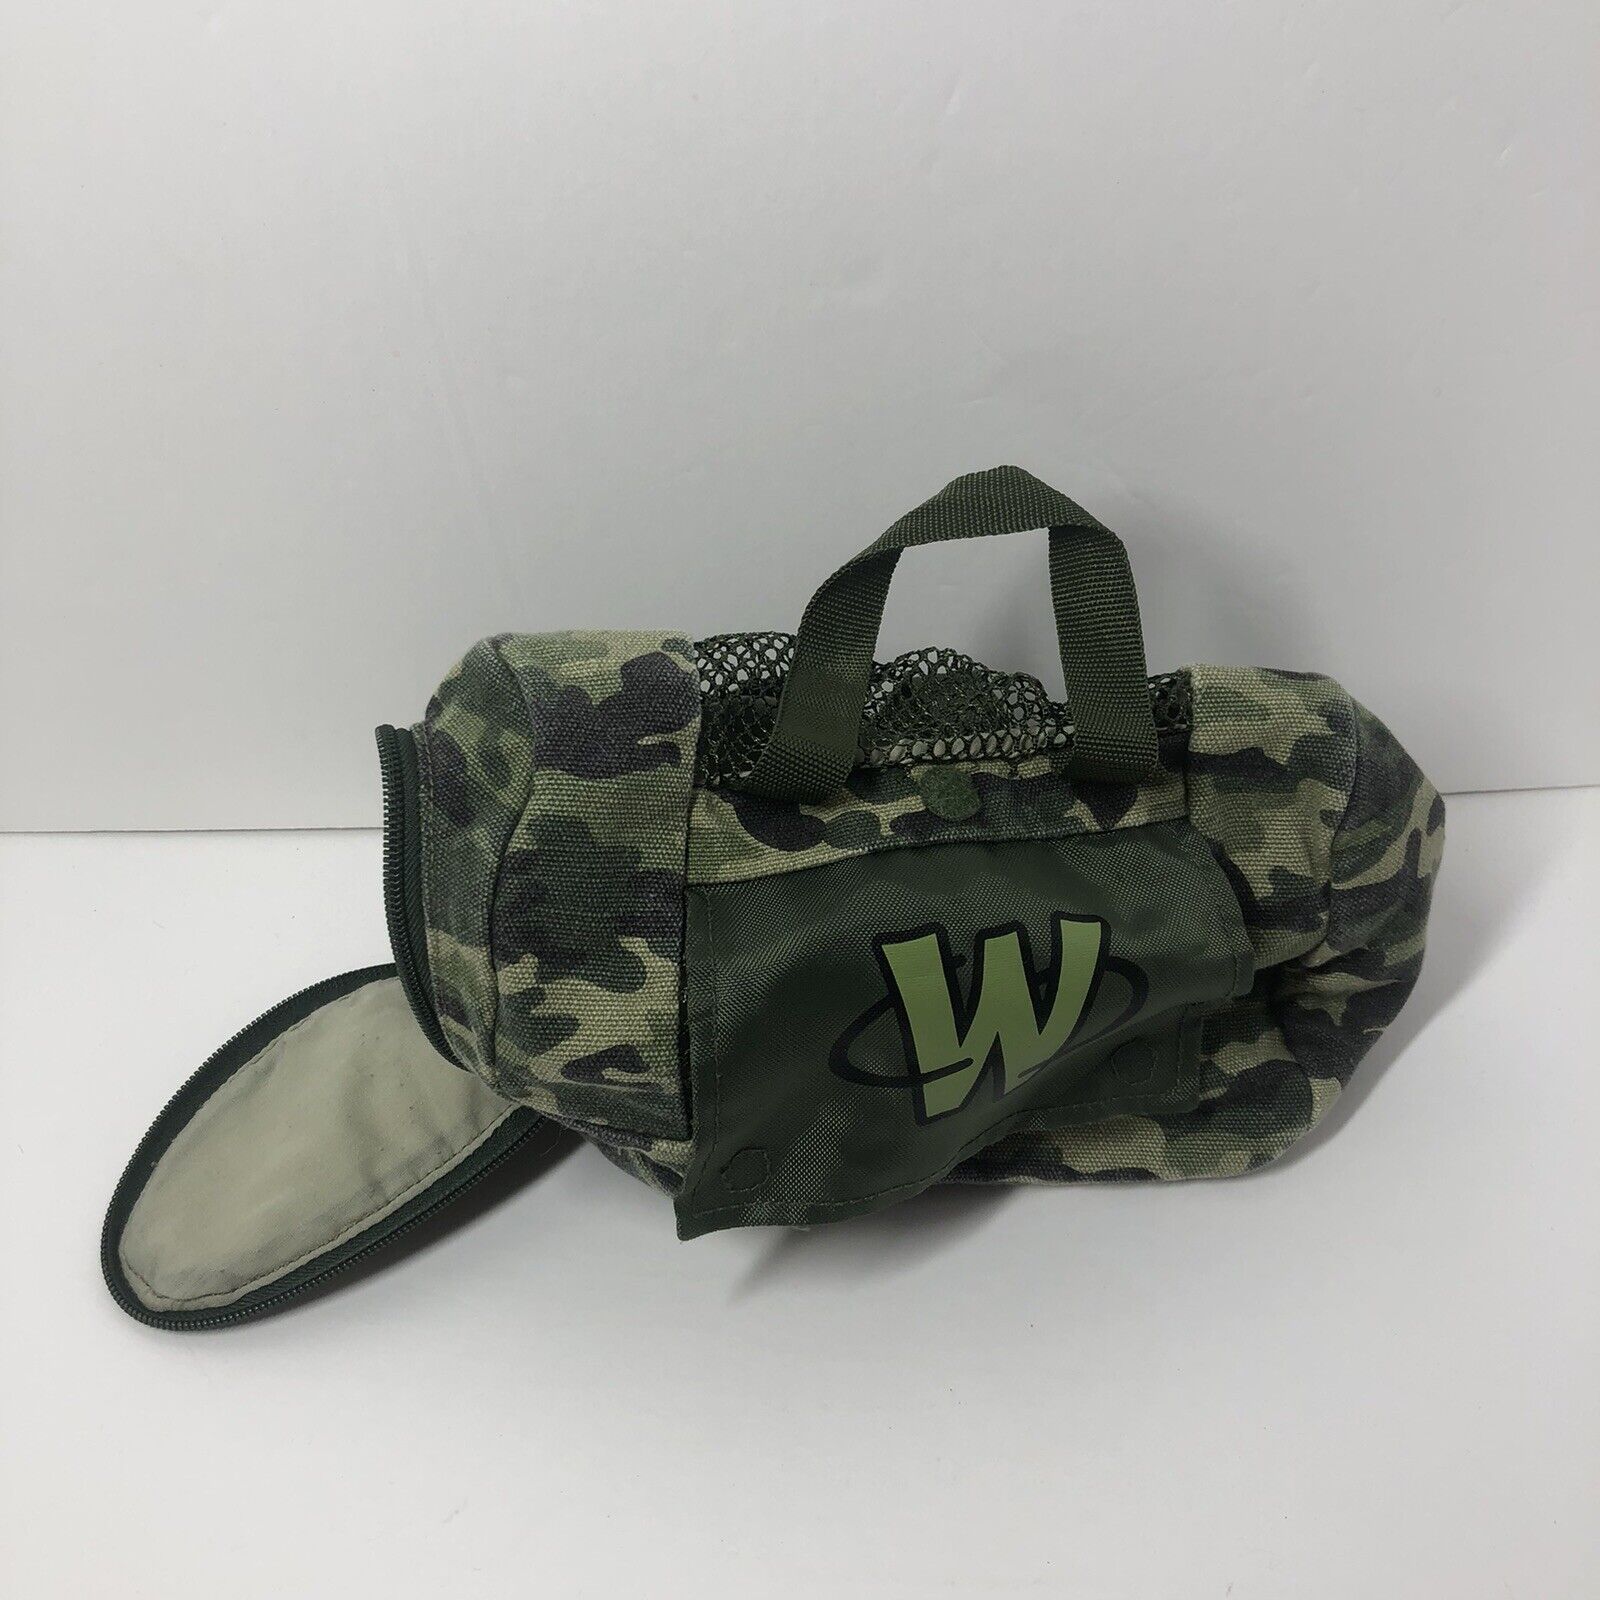 Webkinz Army Duffle Bag Pet Carrier Zip Opening Mesh Window Plush Stuffed Animal